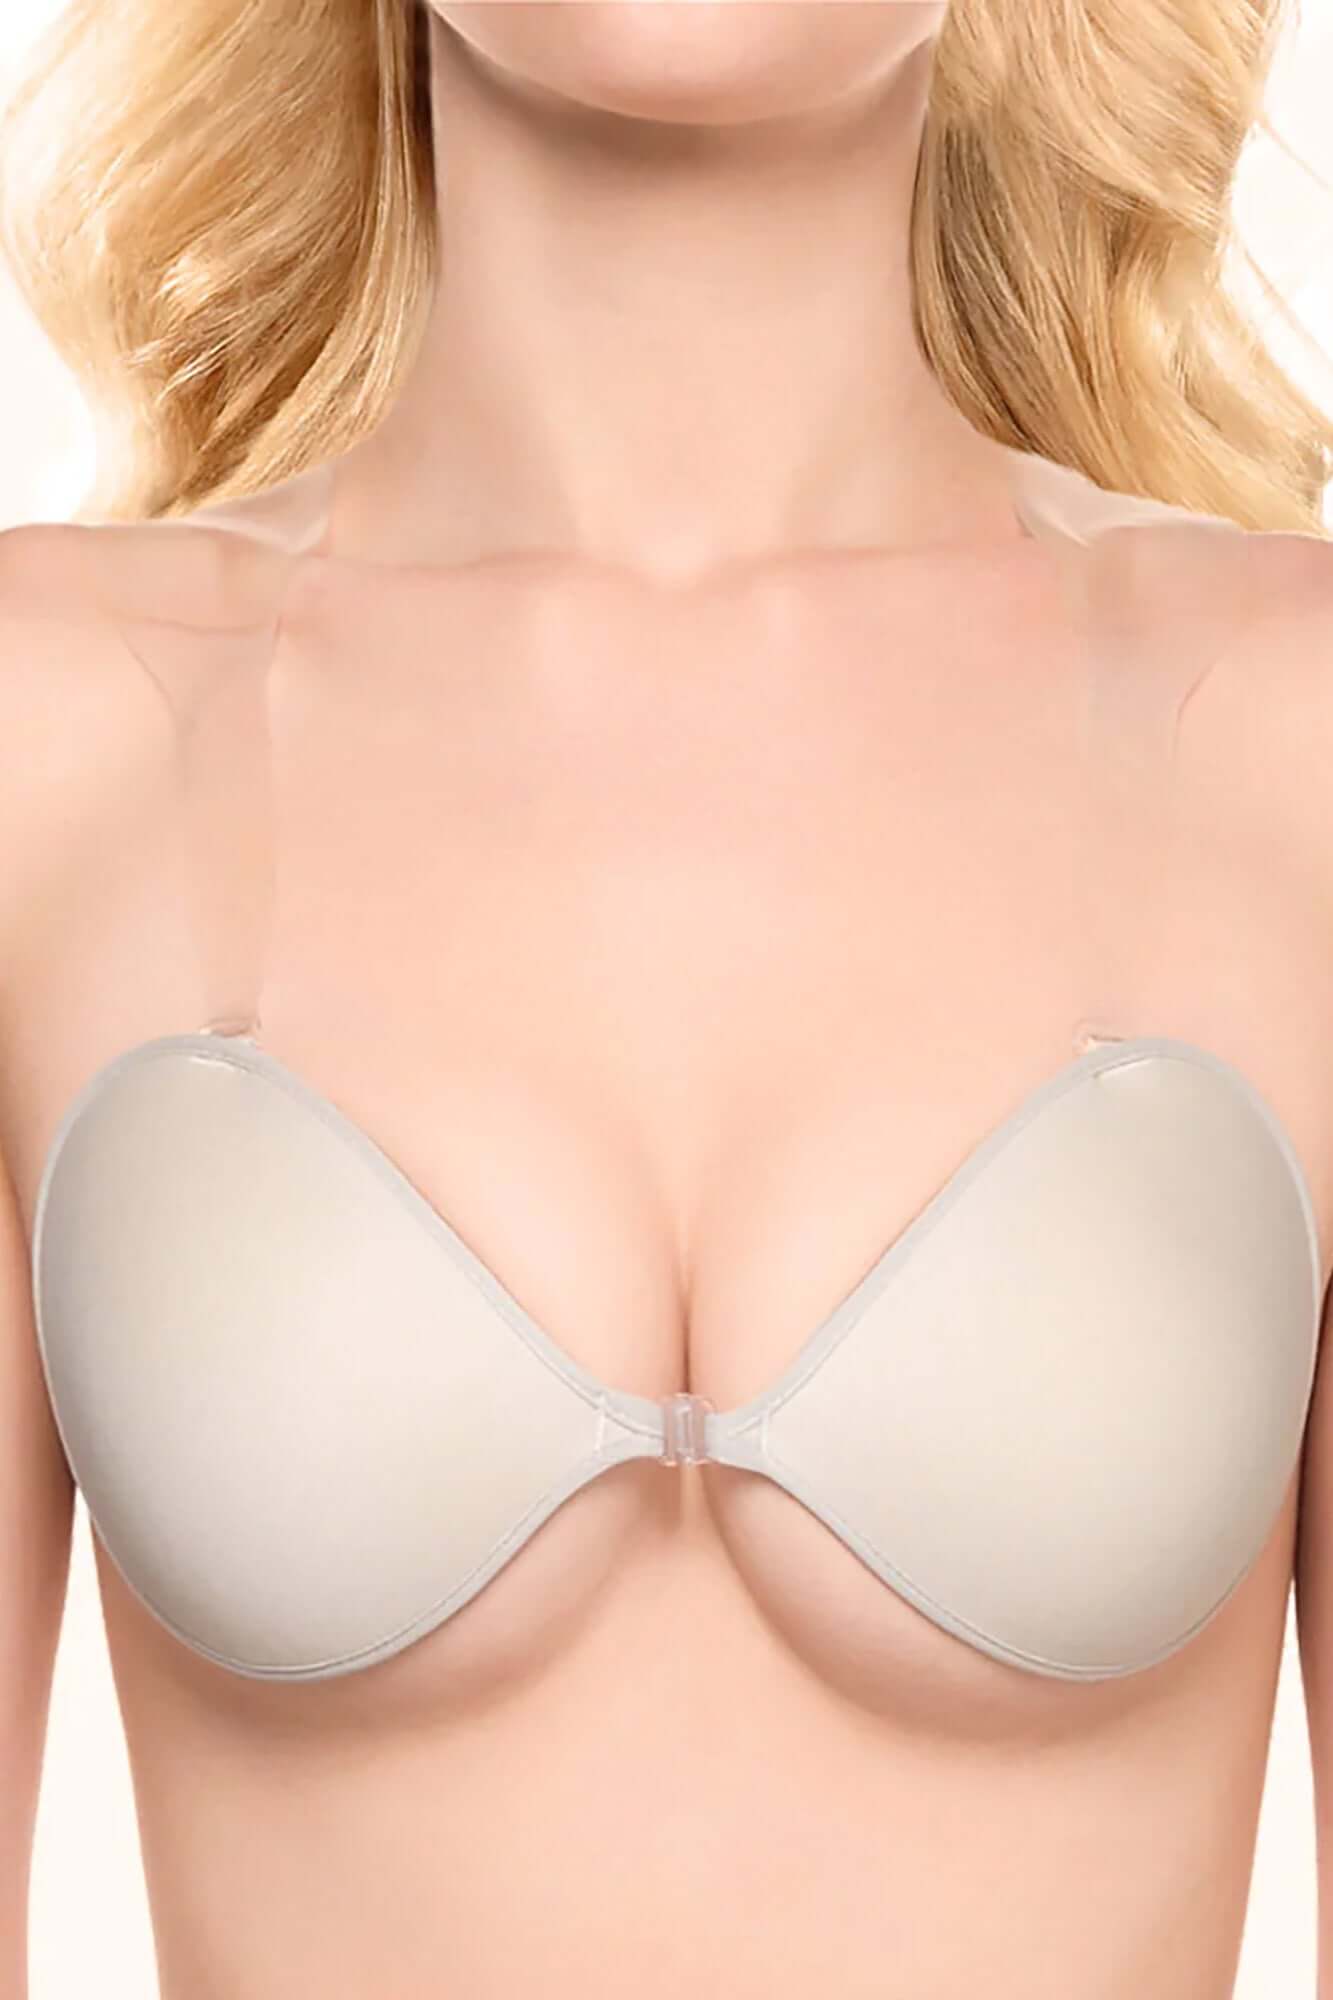 NuBra Adhesive Bras - Sticky boobs, Strapless, Backless bra at Petticoat  Lane